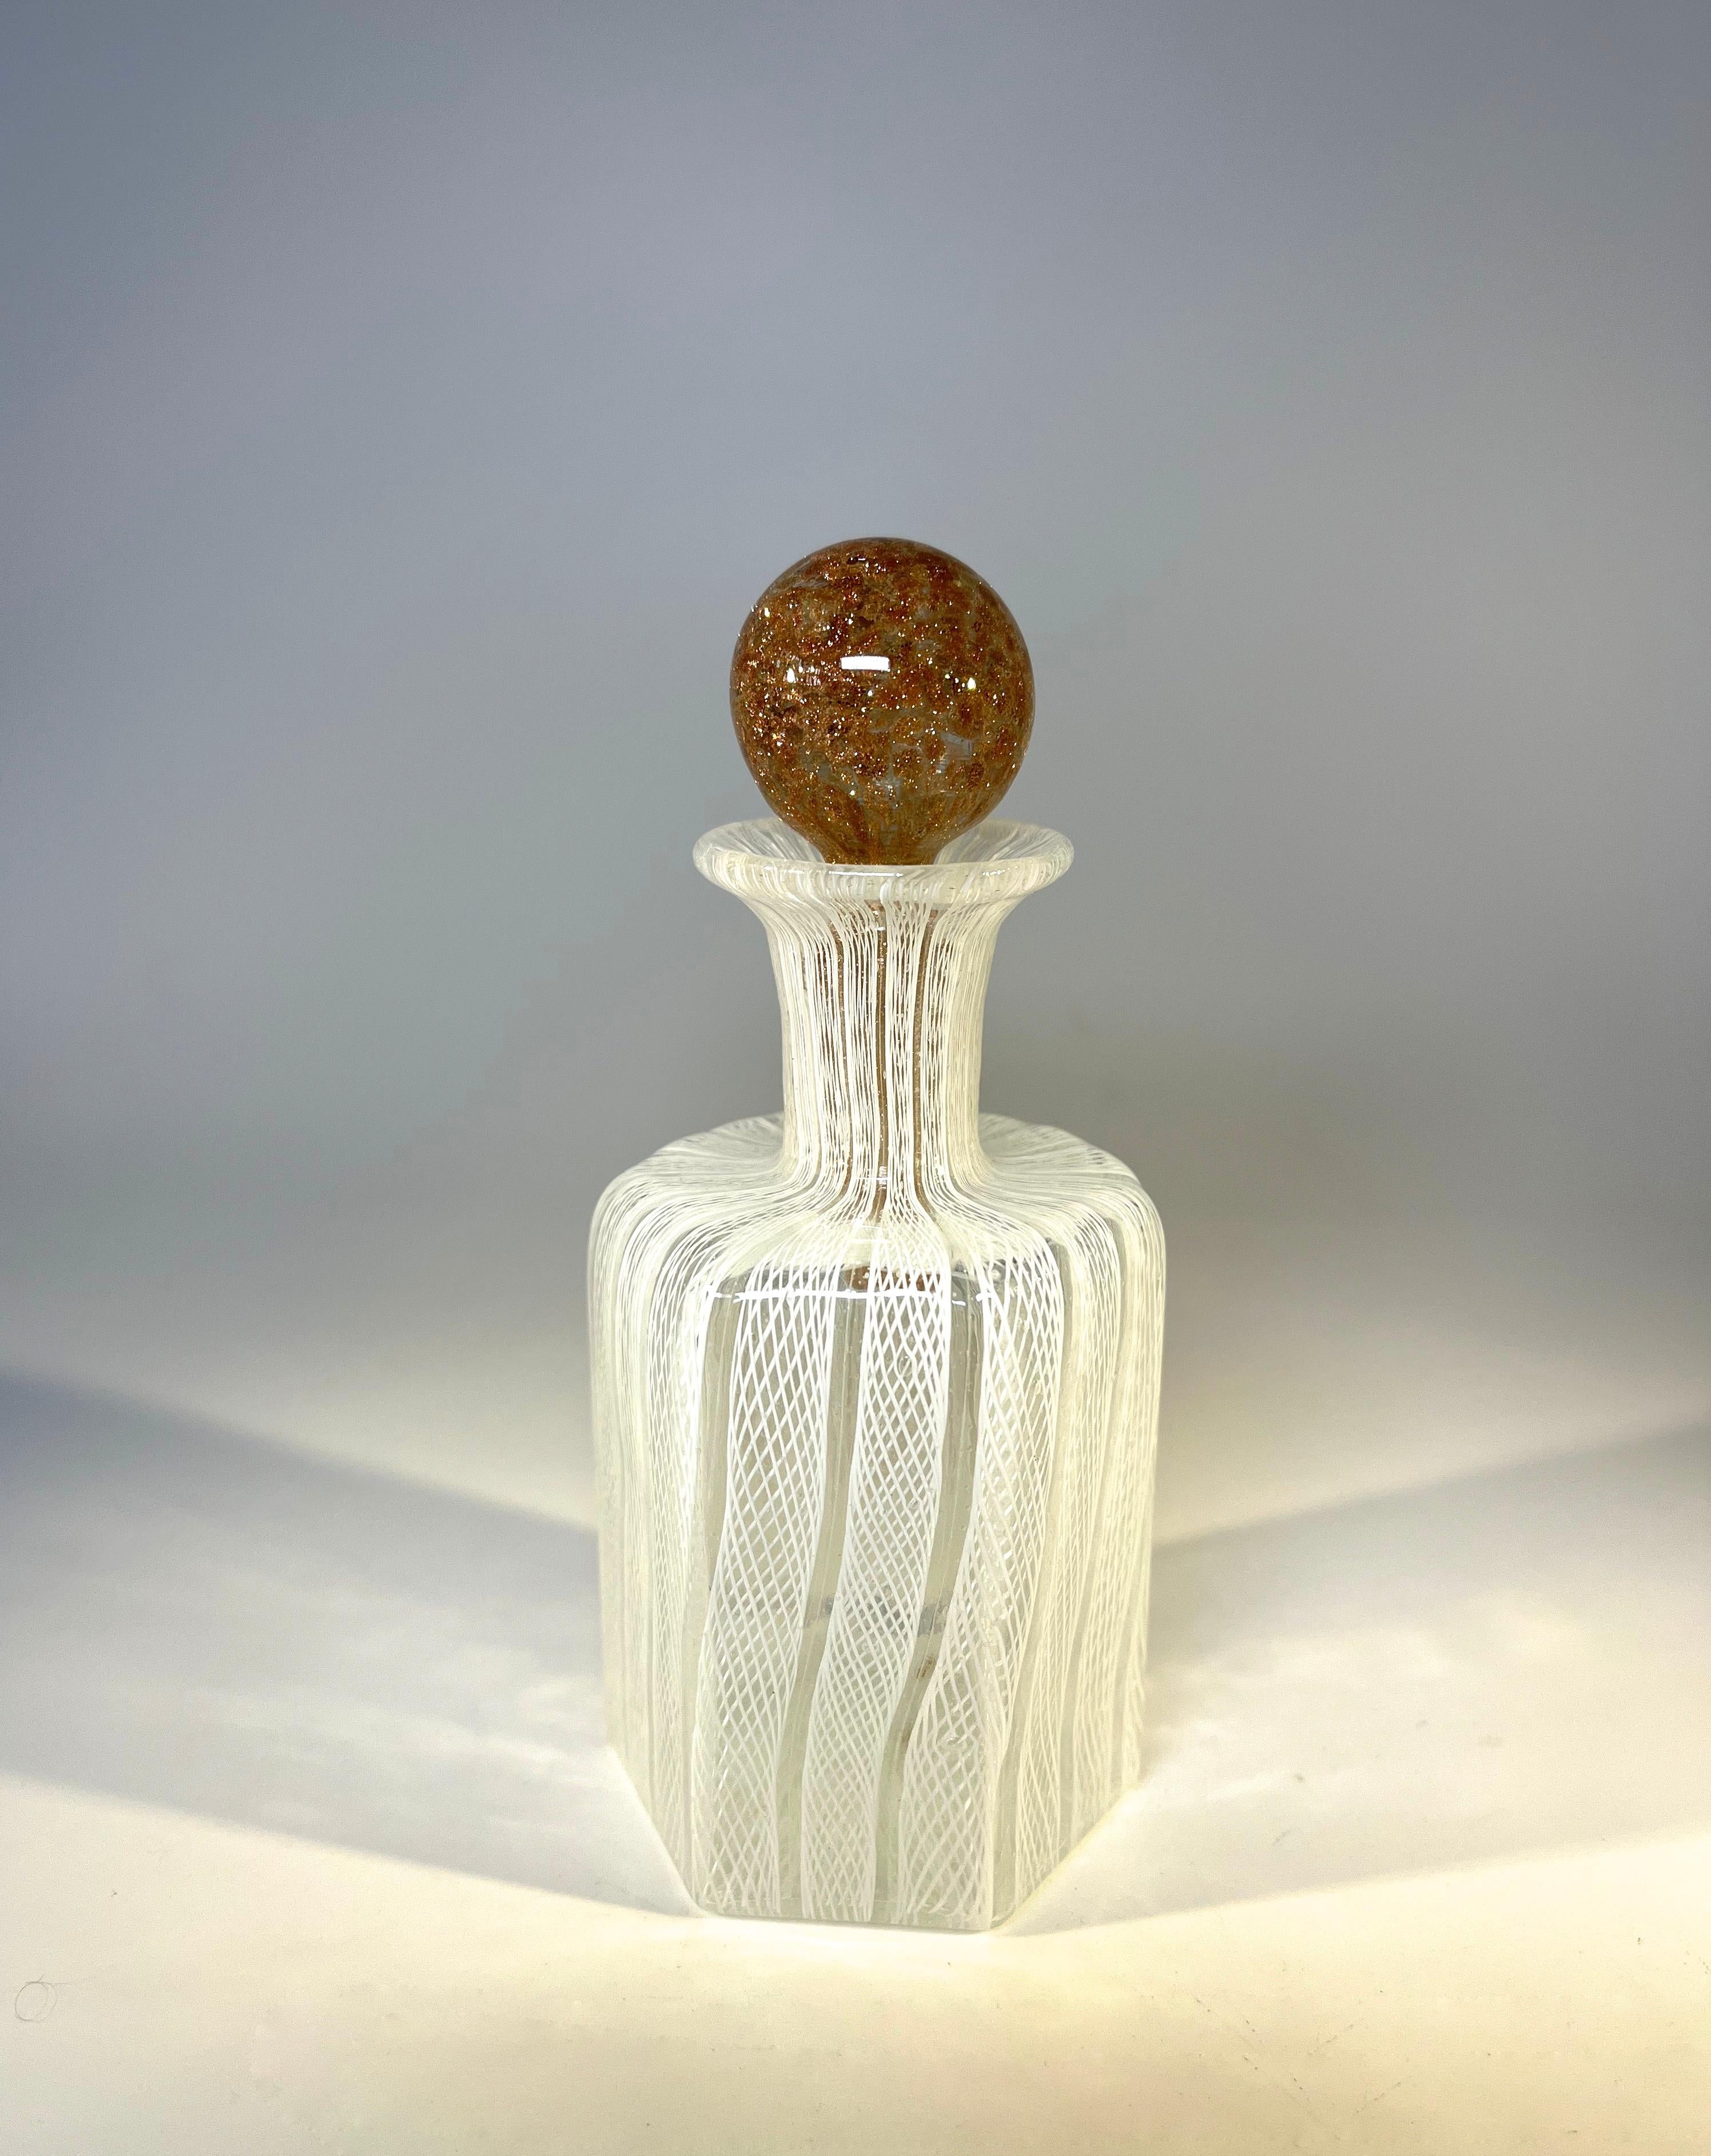 20th Century Desirably Shaped Latticino Venetian Glass Perfume Bottle with Aventurine Stopper